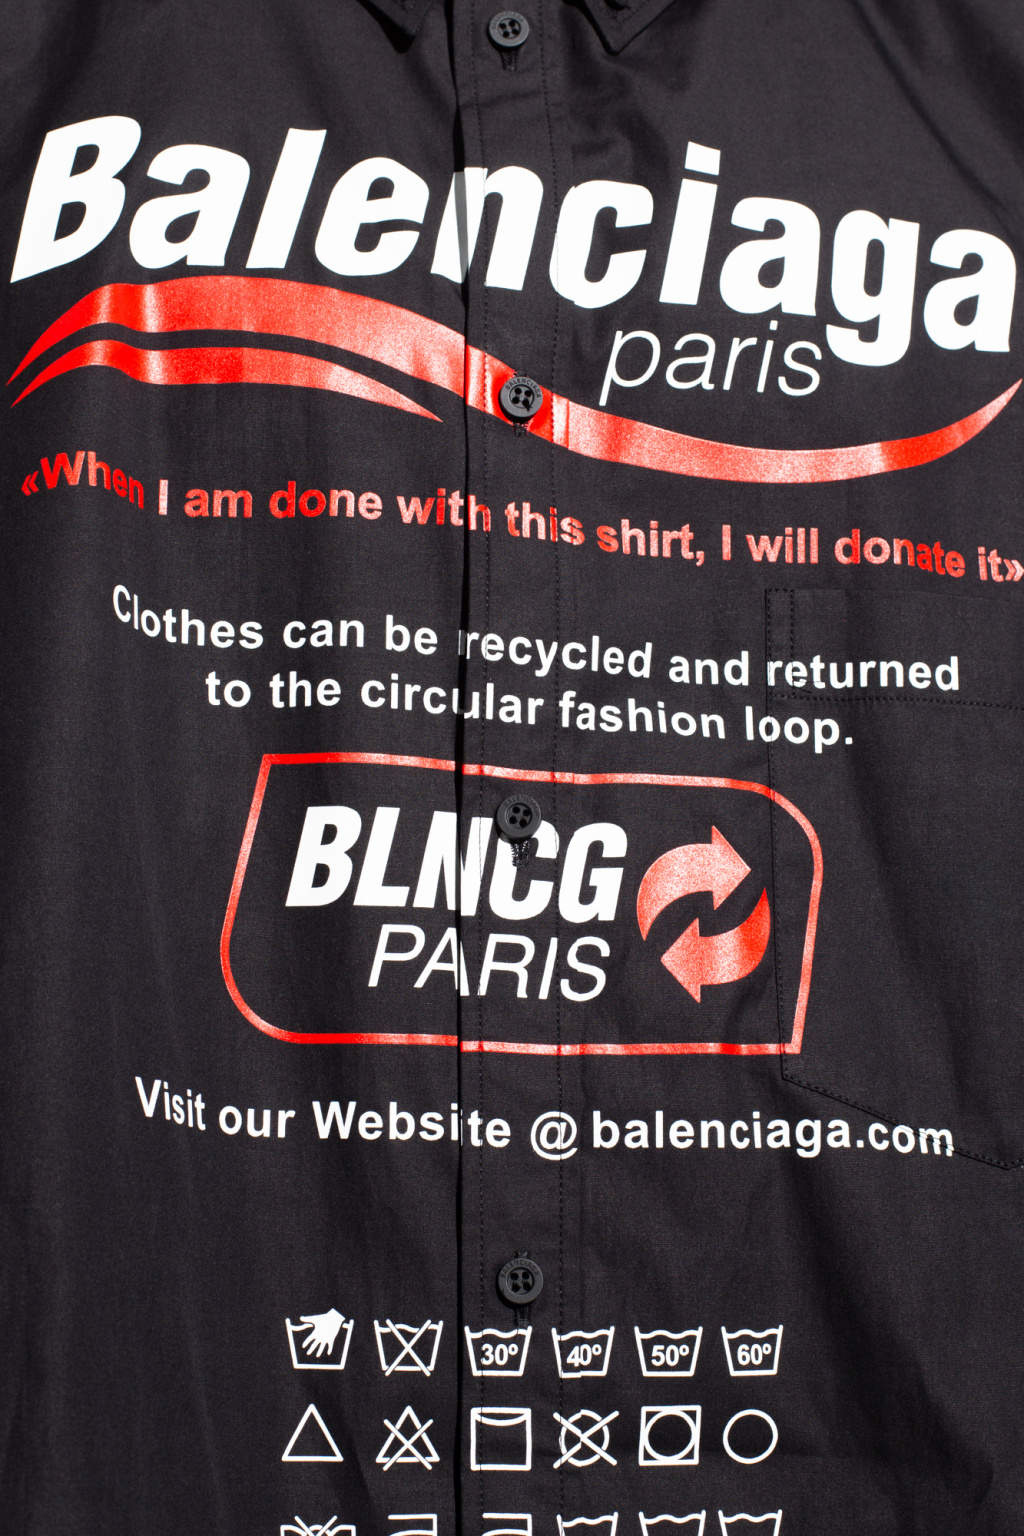 Balenciaga's T-shirt Shirt is confusing the internet